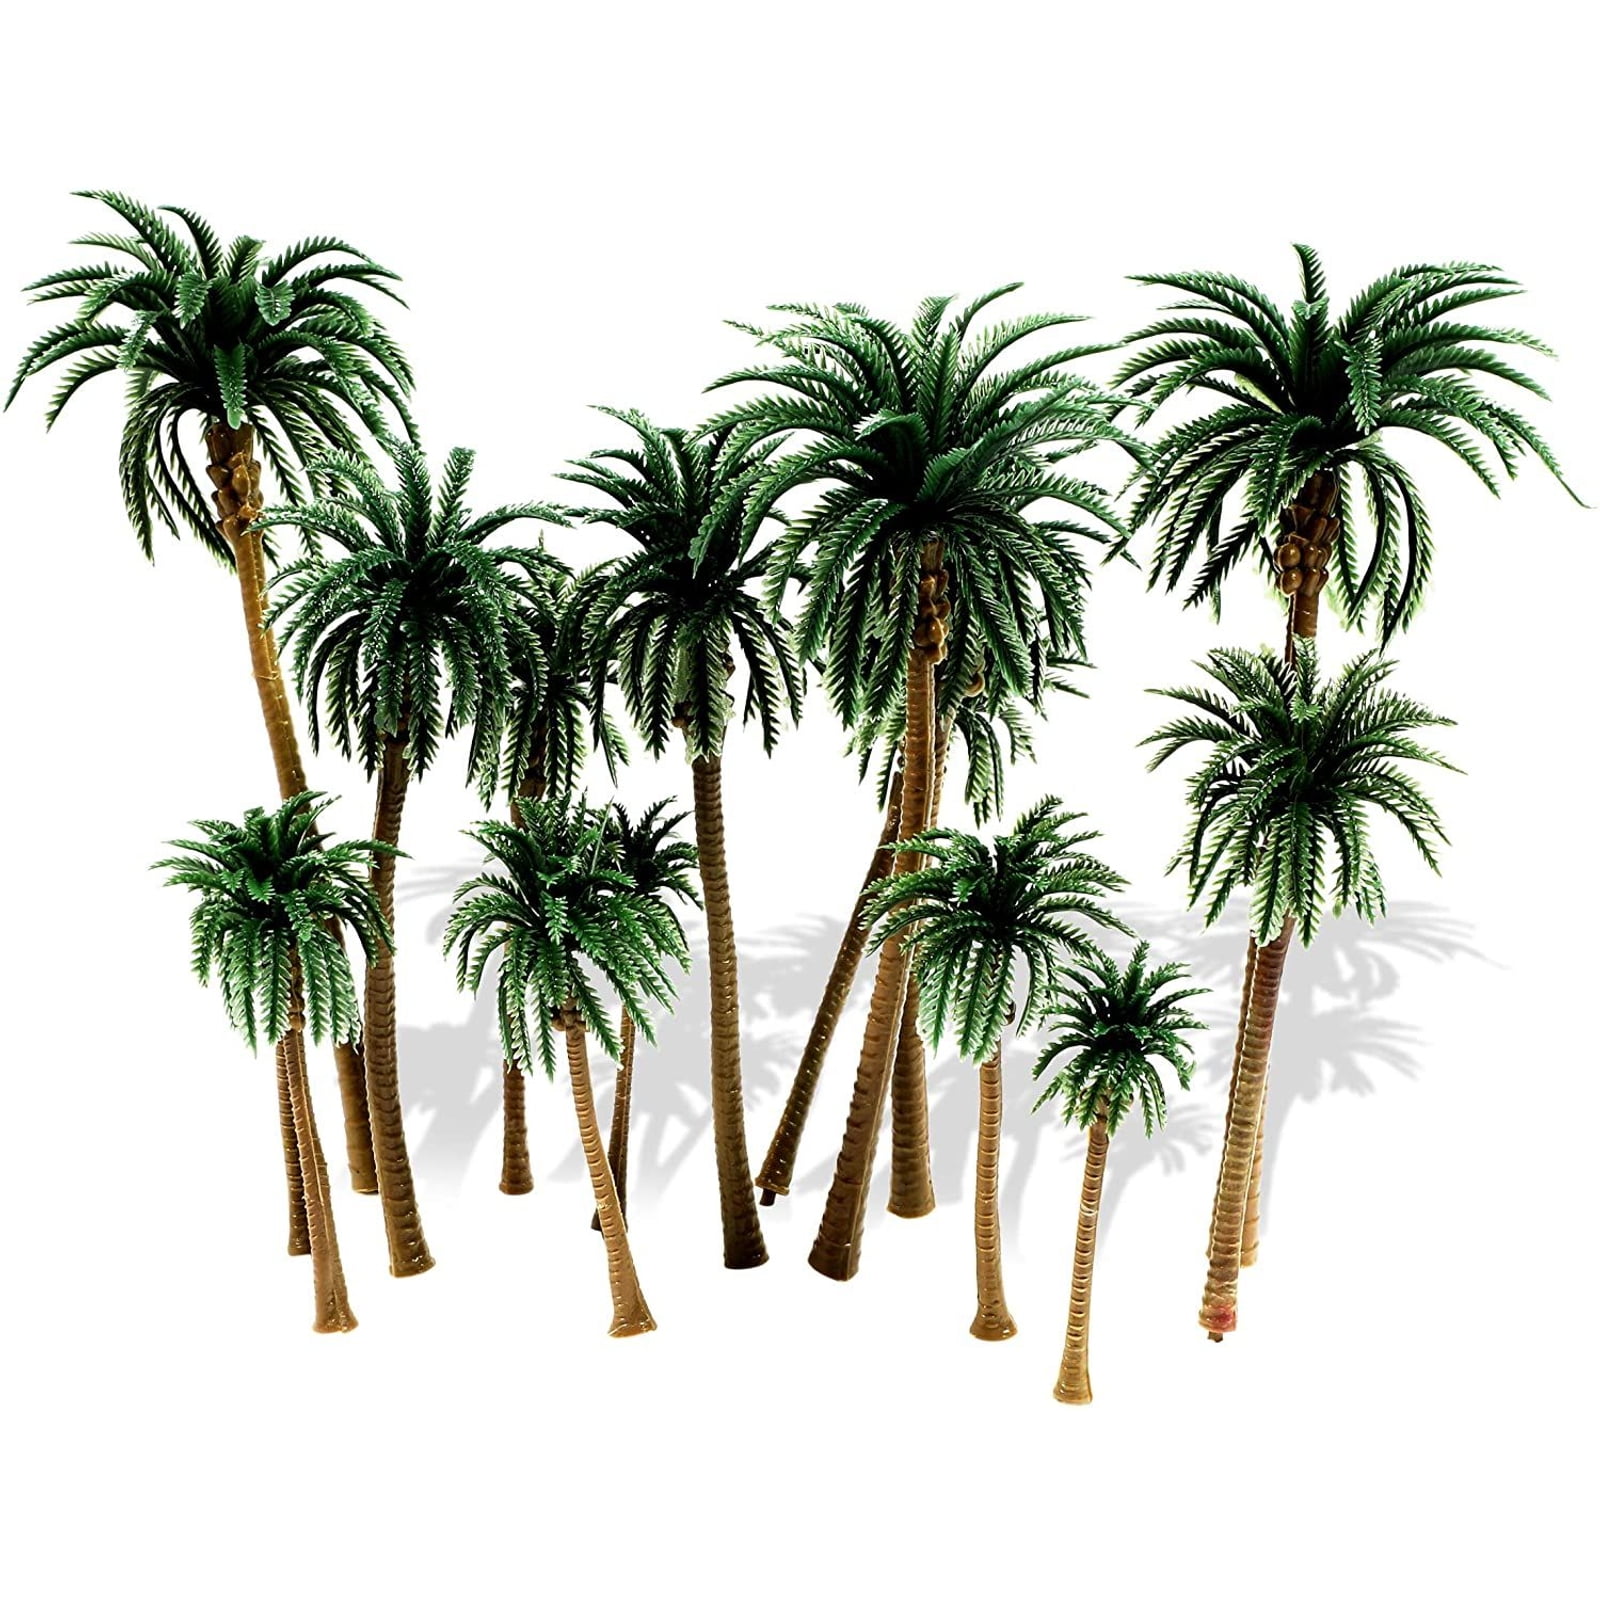 Rainforest Diorama Supplies Model Miniature Forest Plastic Toy Trees Bushes  Coconut Palm Plant Crafts Train Scenery Cedar 18 Set